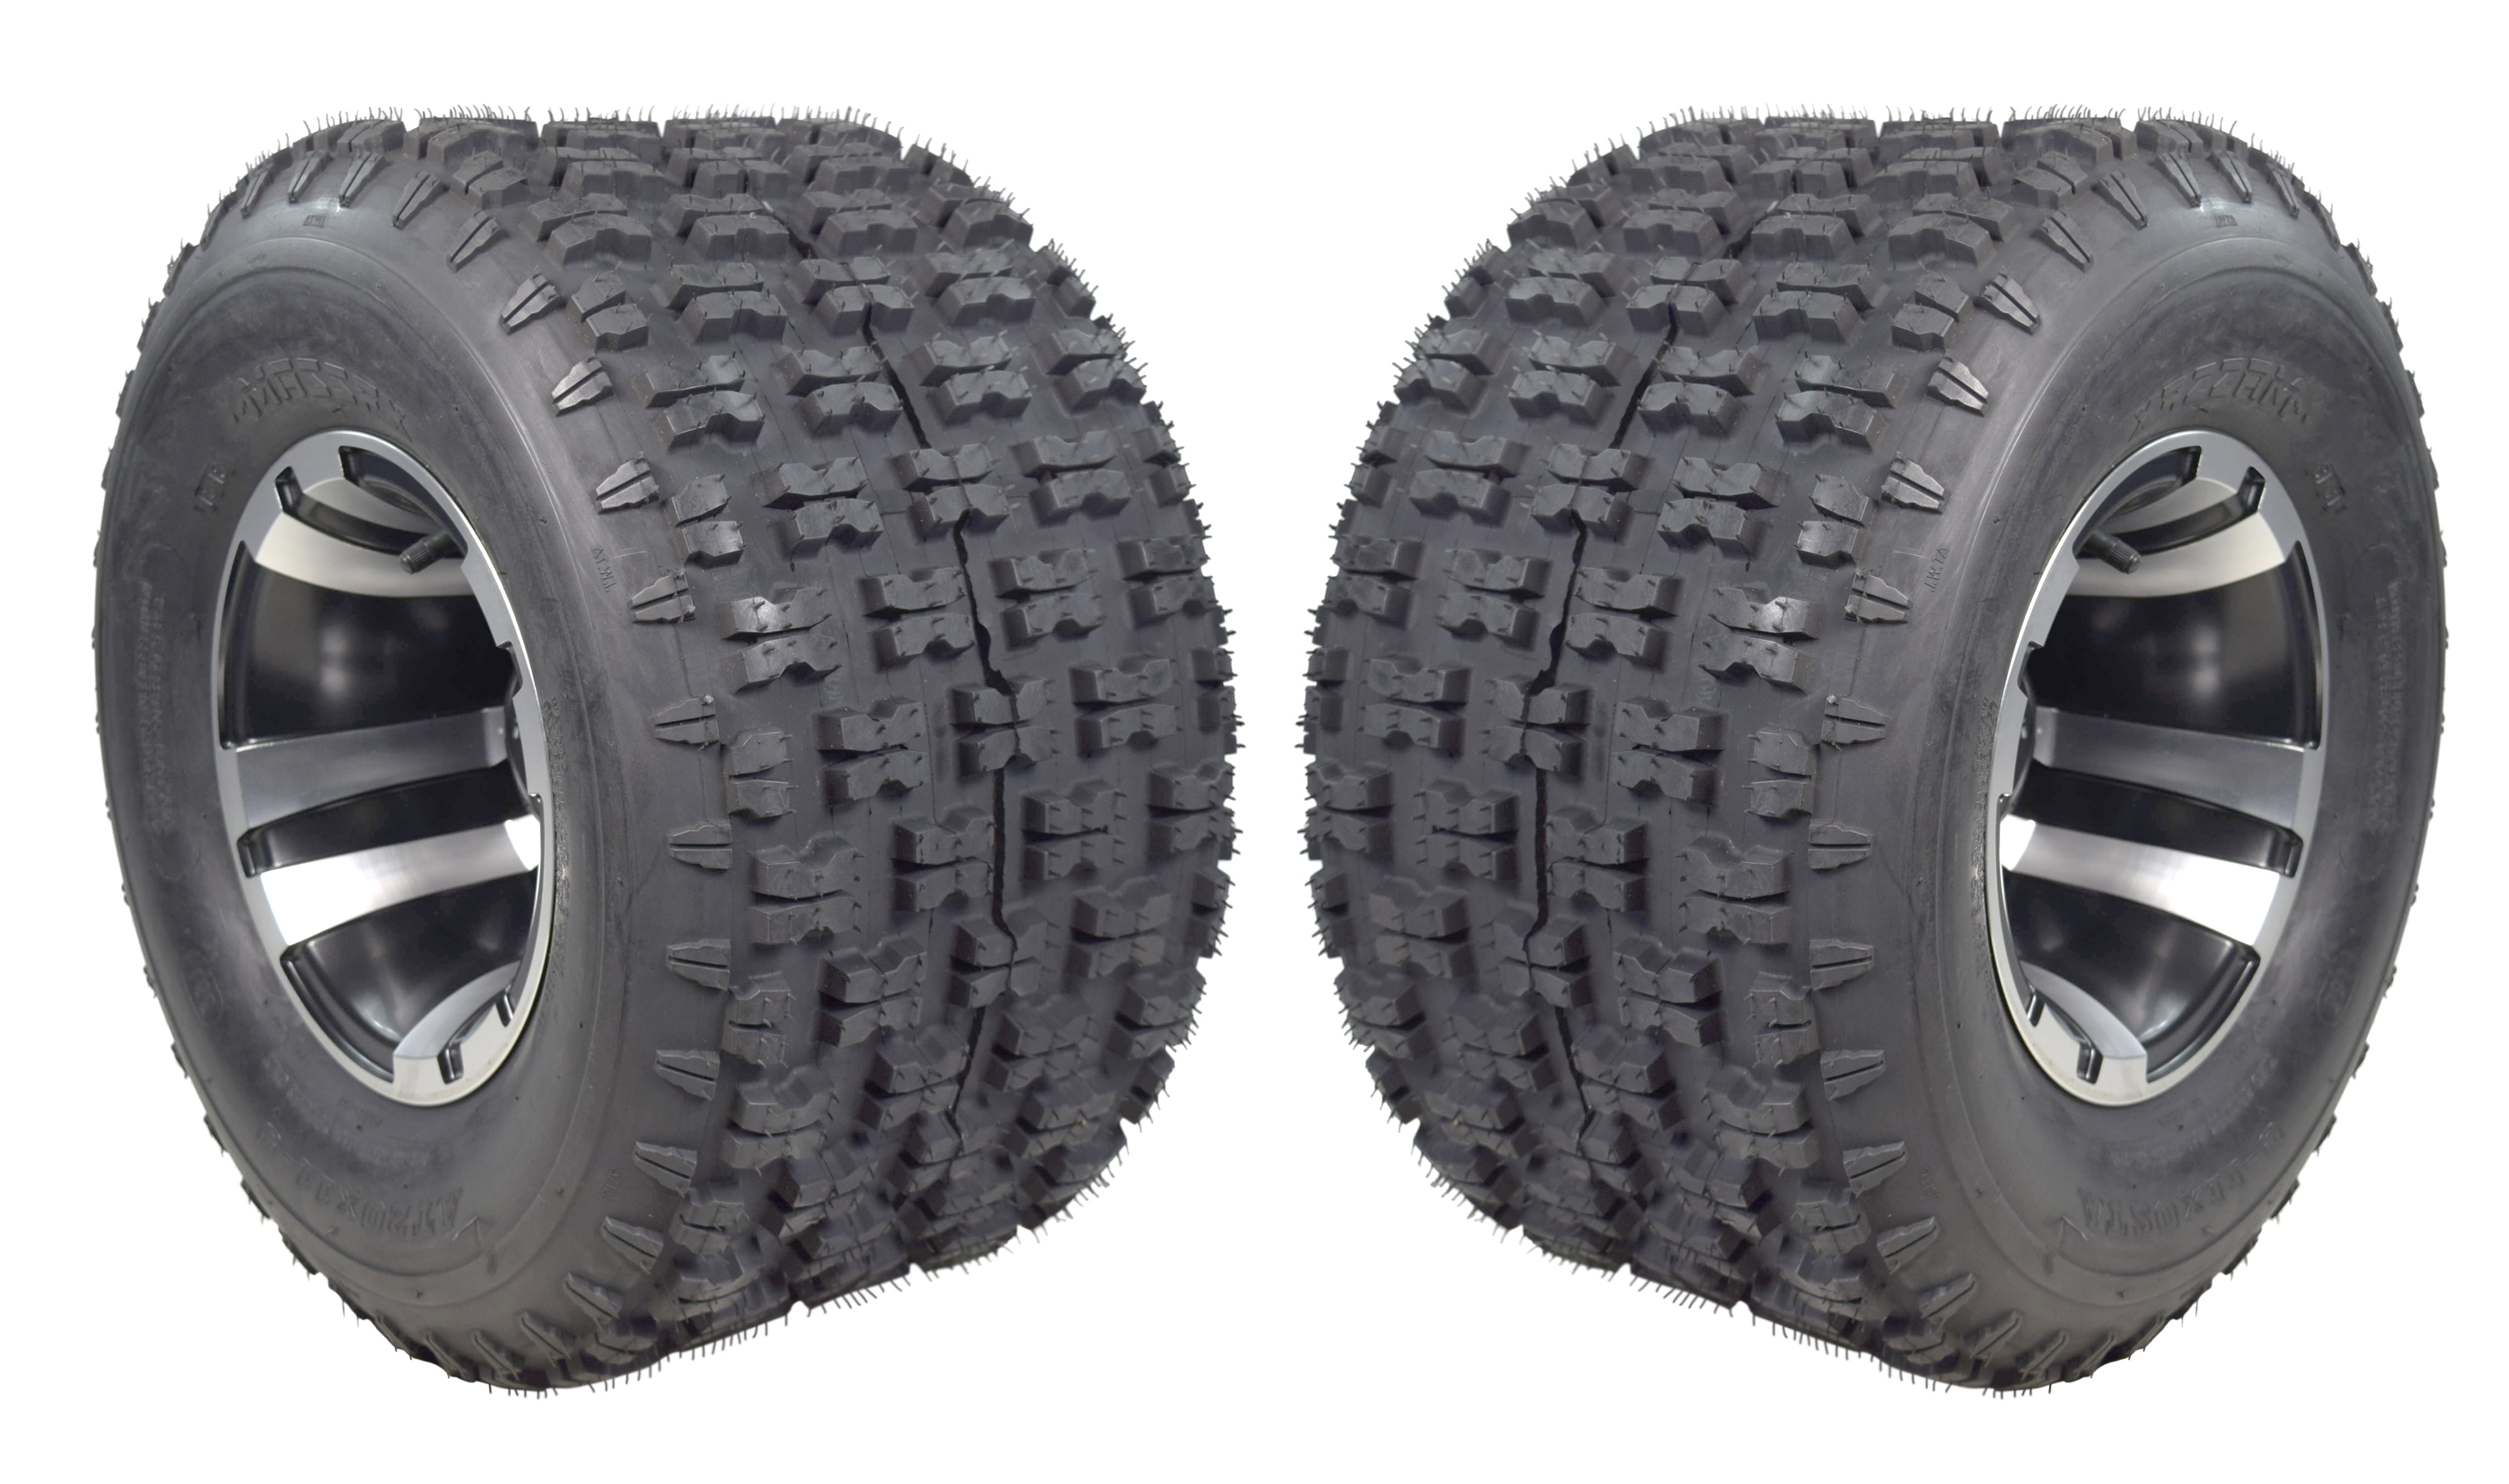 MASSFX 20 Rear ATV Tire Set 20x11-9 Tire 4 PLY 20x11x9 MO20119 2 Pack 